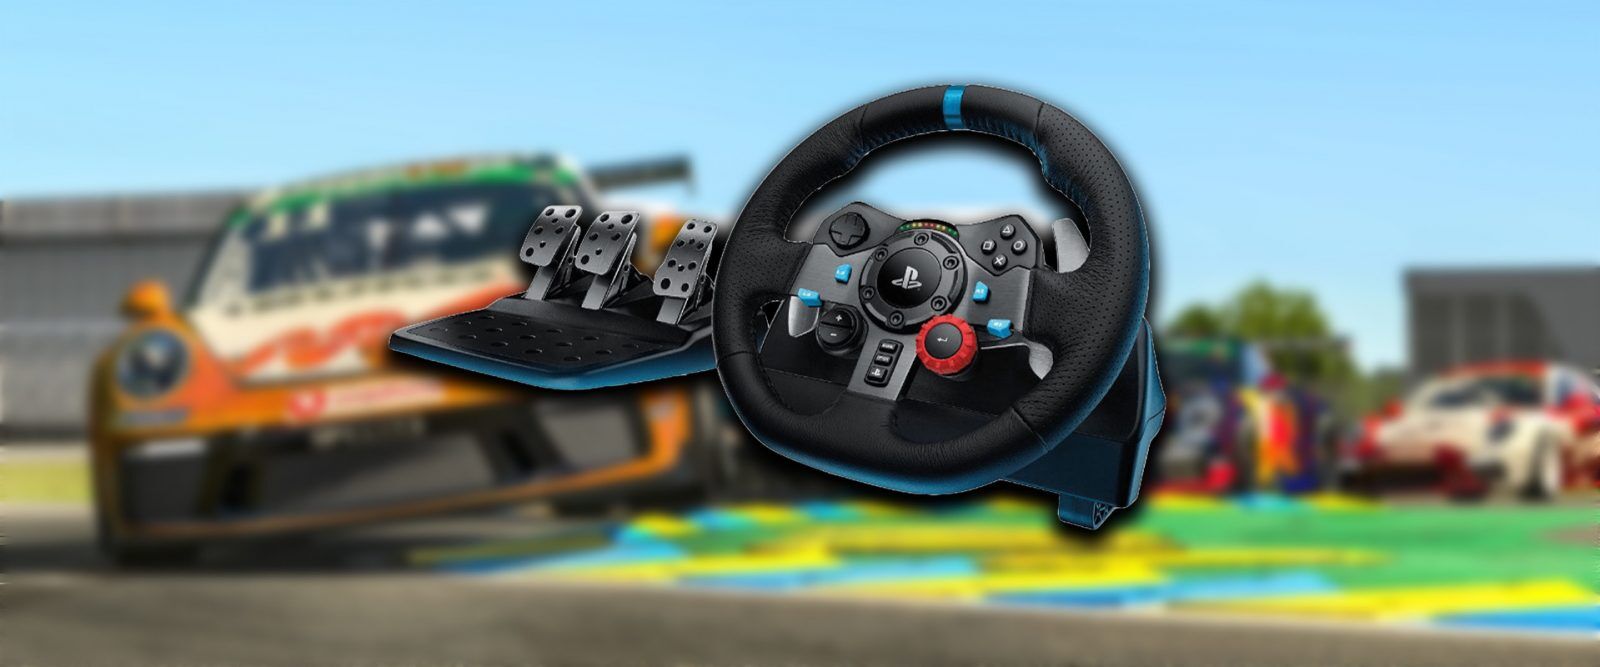 New Logitech racing wheel coming soon